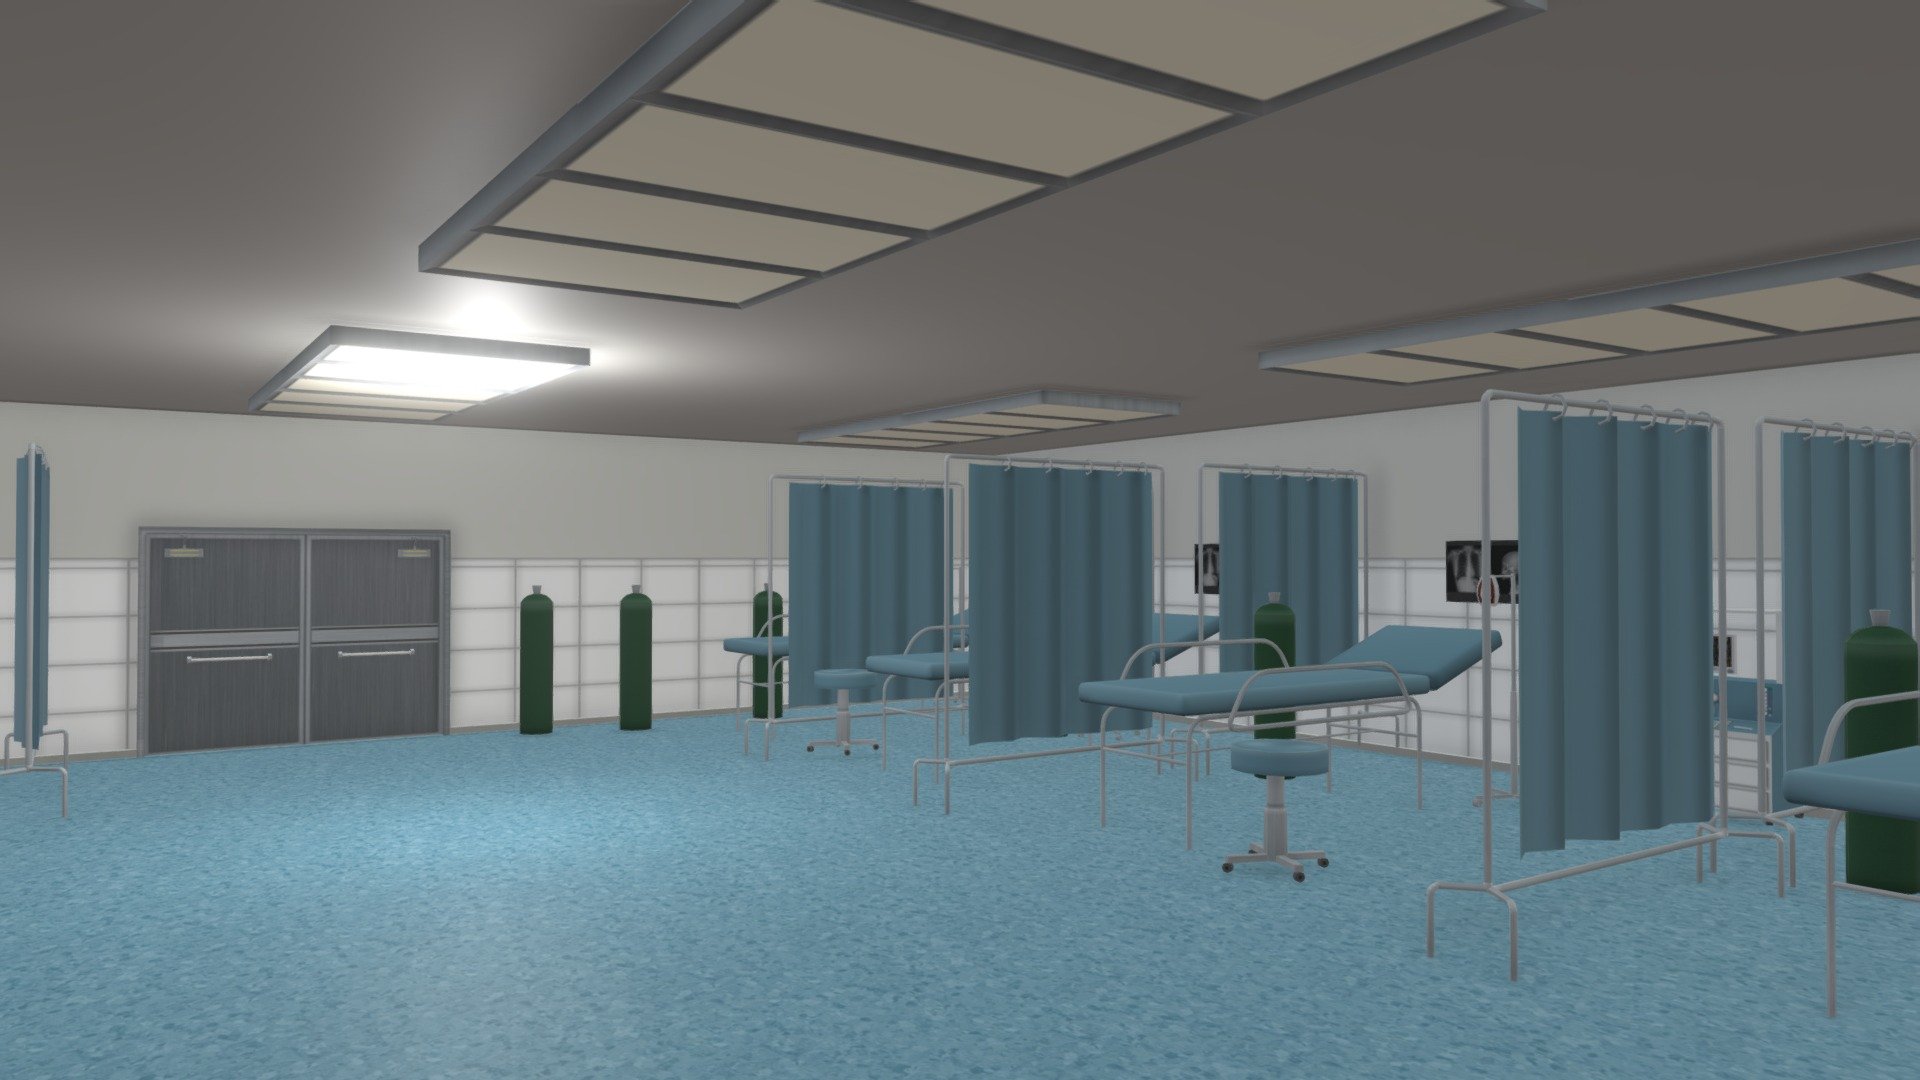 Surgery Room
Low Poly Scene - Surgery Room - 3D model by samuelbraga 3d model